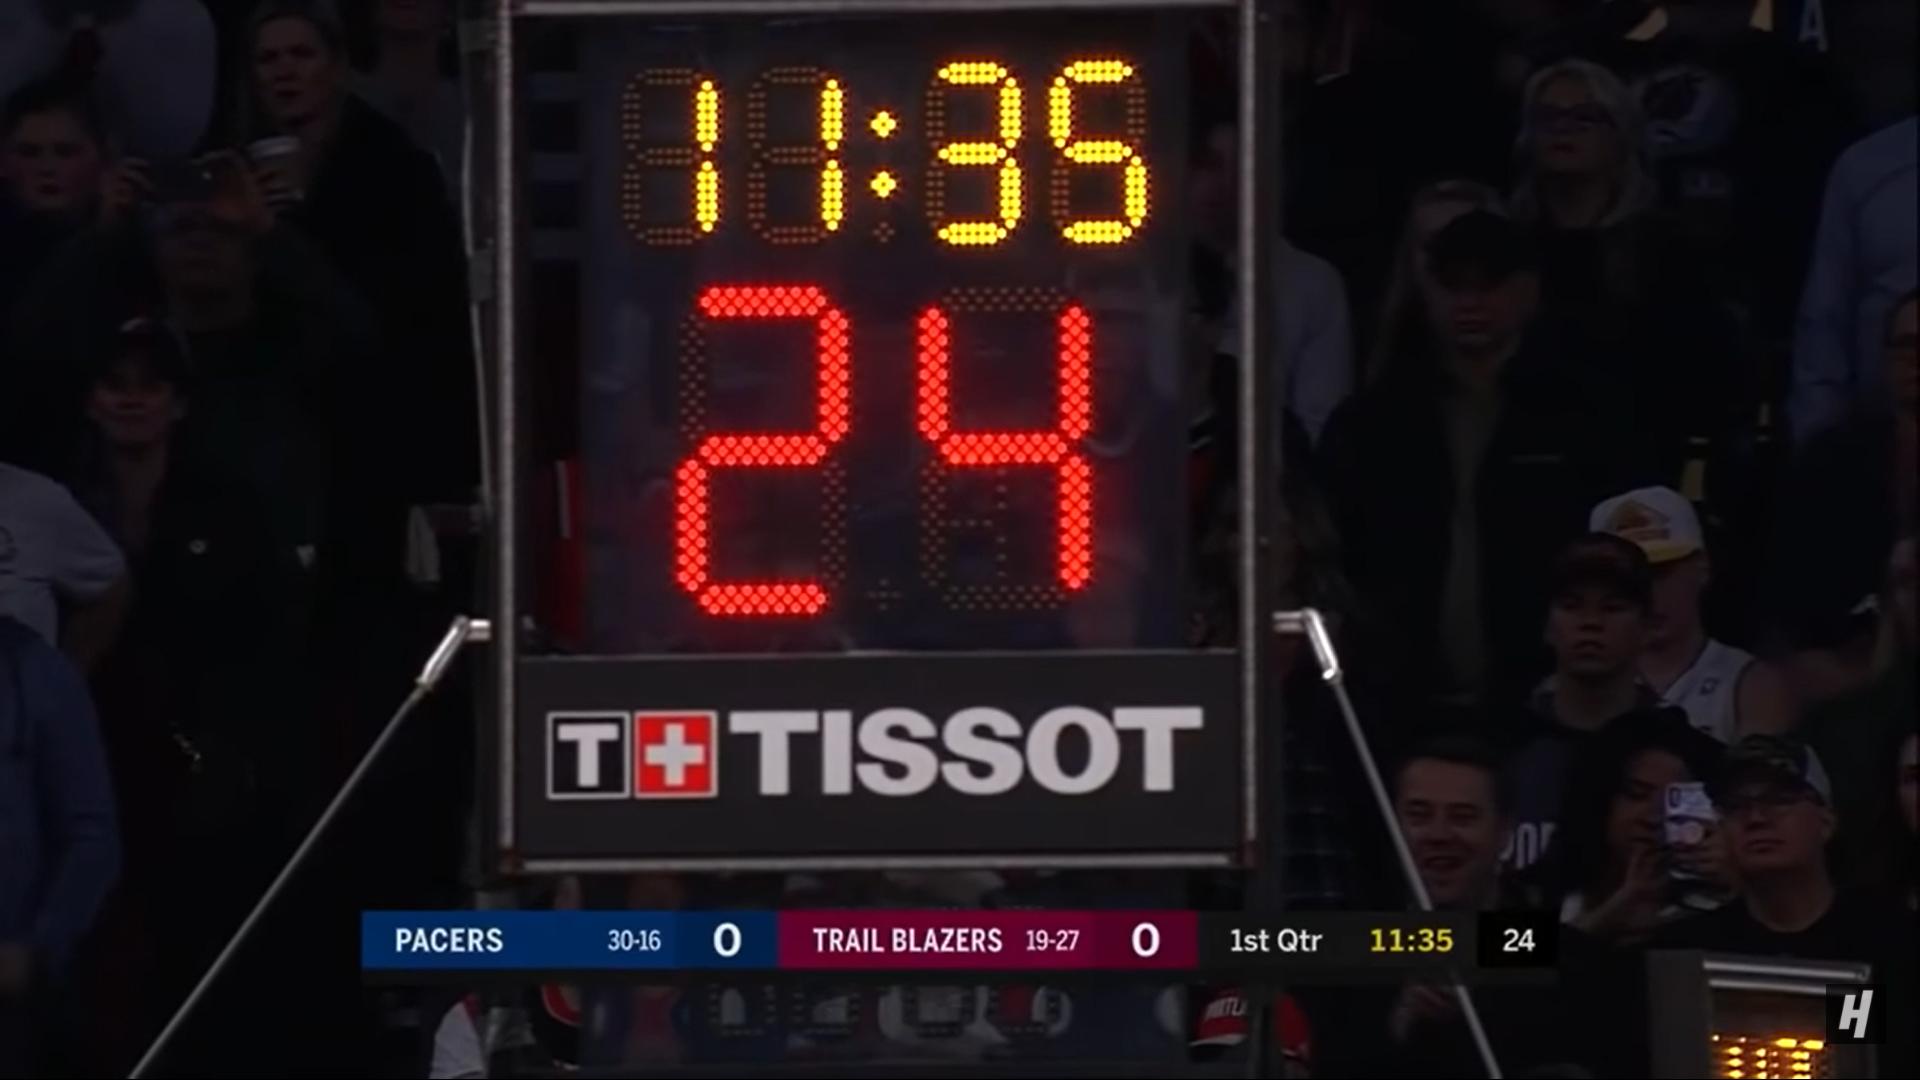 Horloge 24 secondes basketball